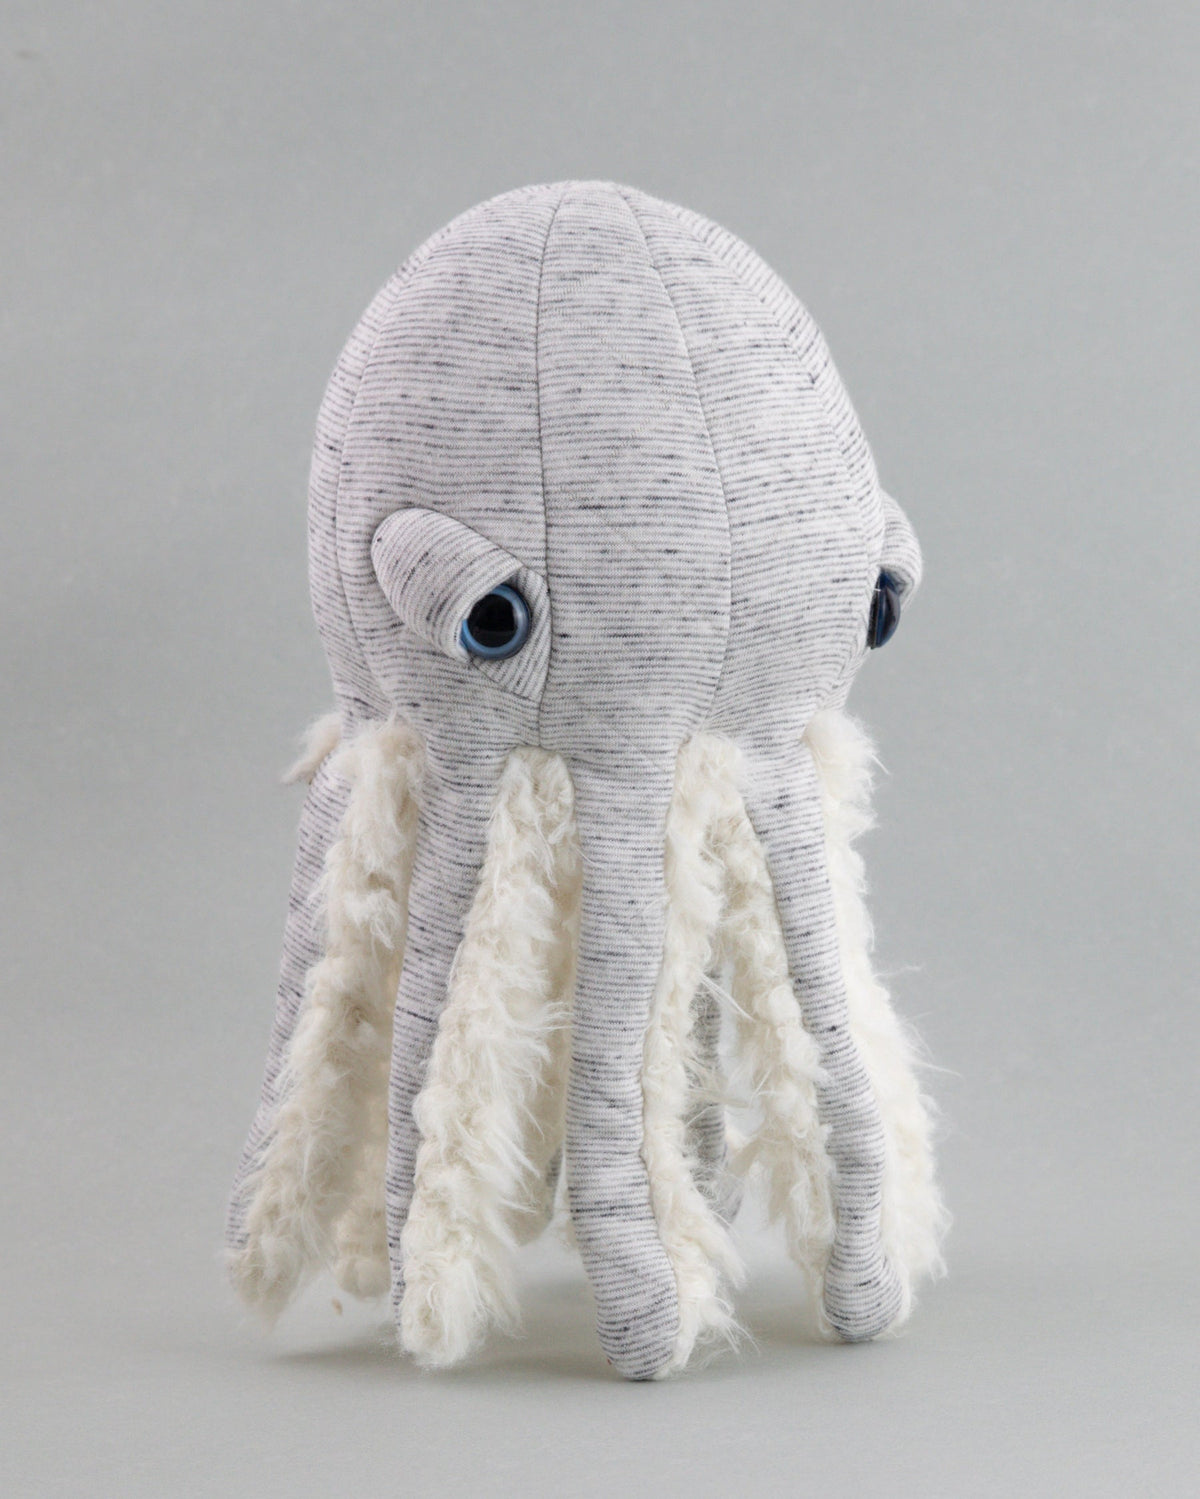 The Mini Octopus GrandPa Fur